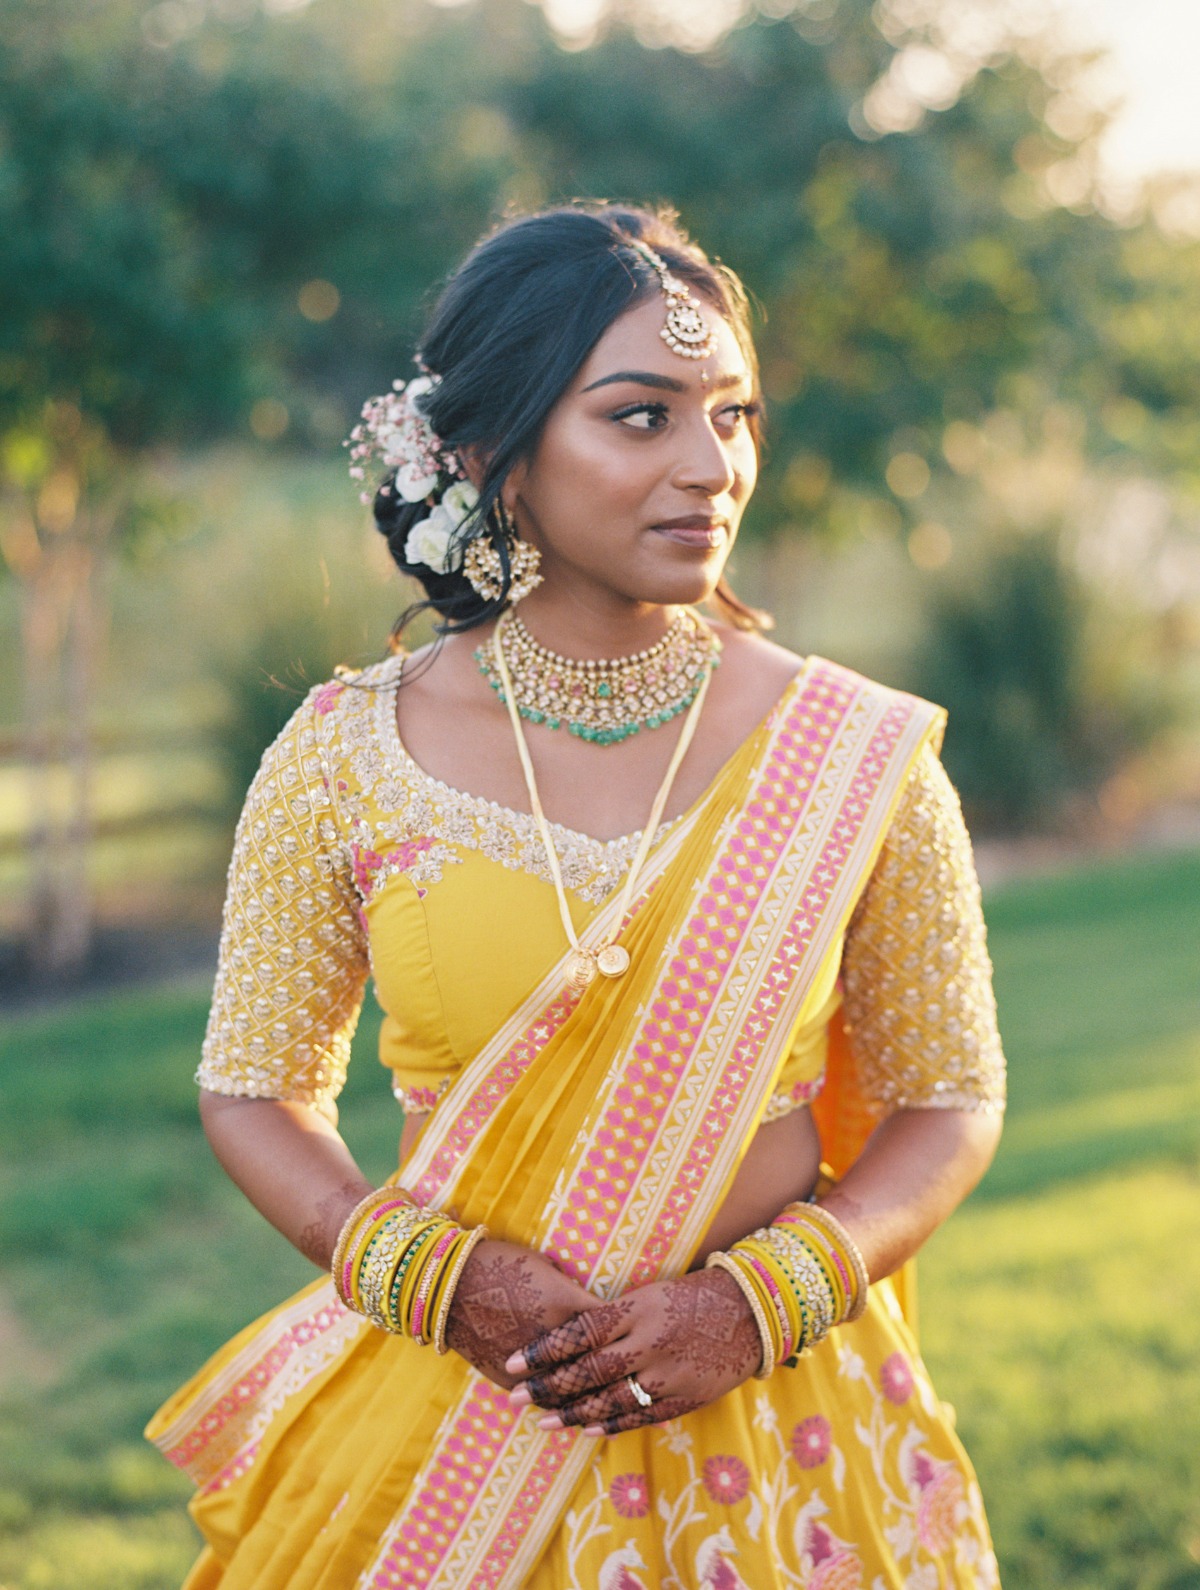 Hindu wedding jewelry